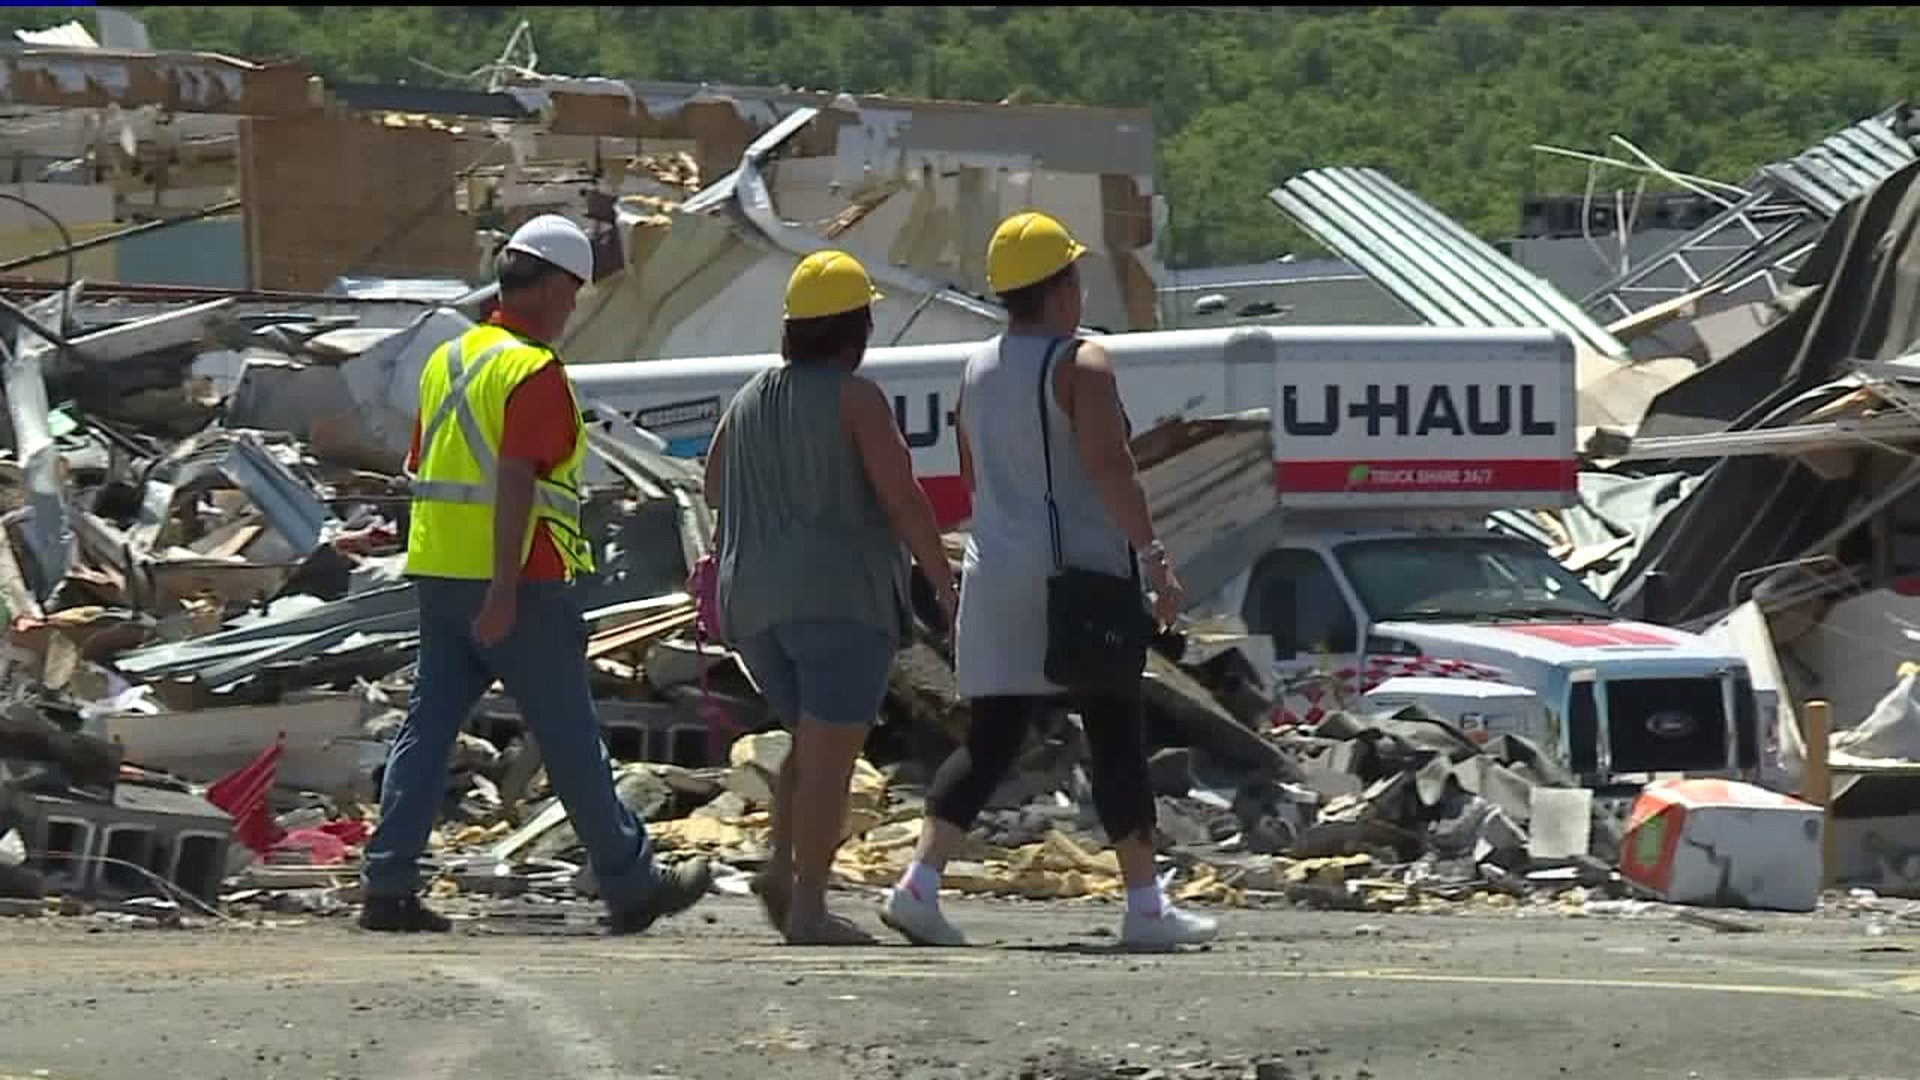 Customers Sort Through U-Haul Storage After Destructive Tornado